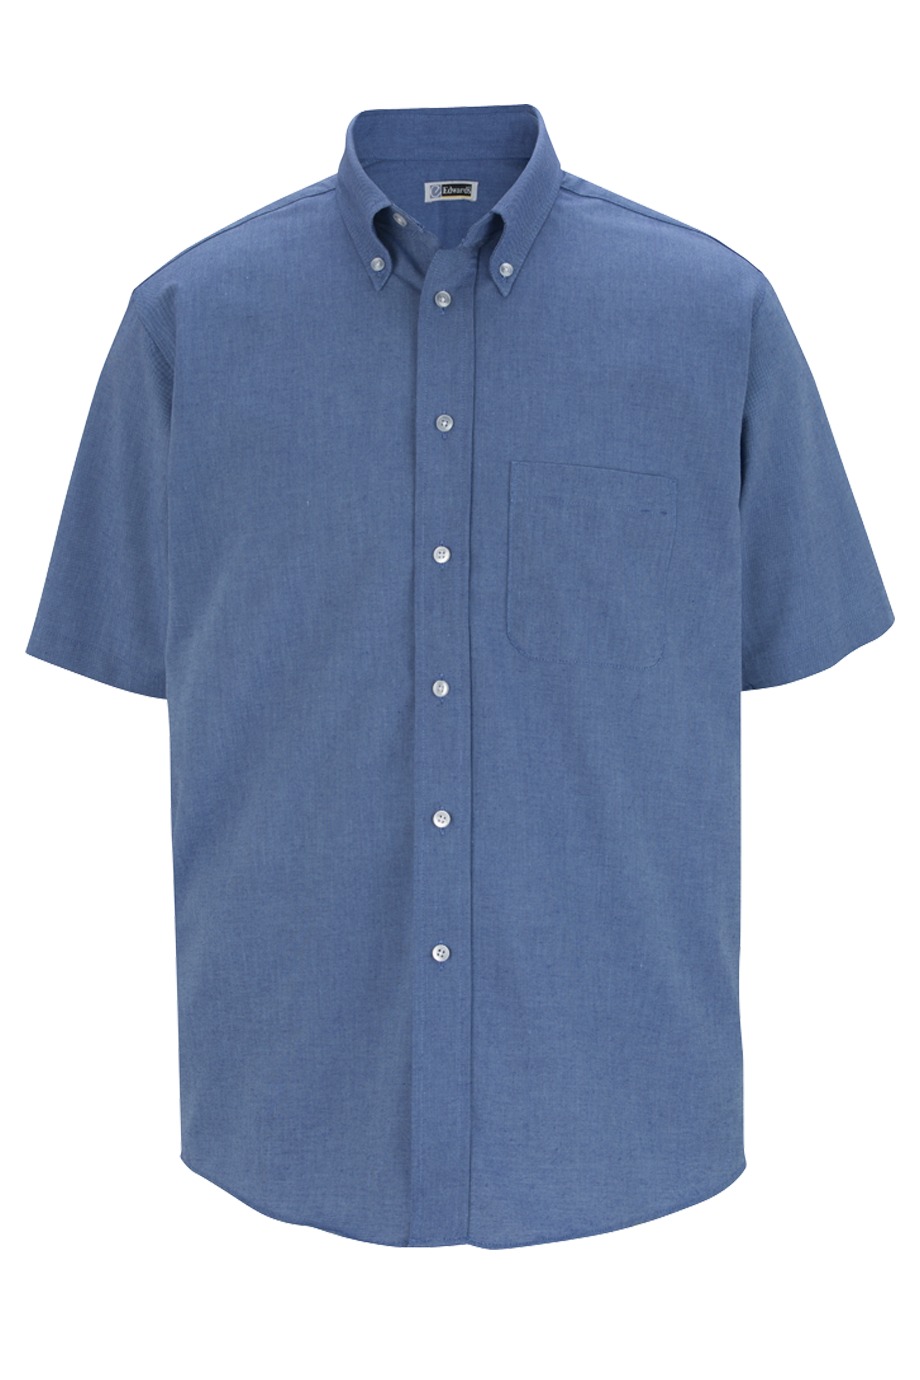 Men's SS Dress Shirt, French Blue